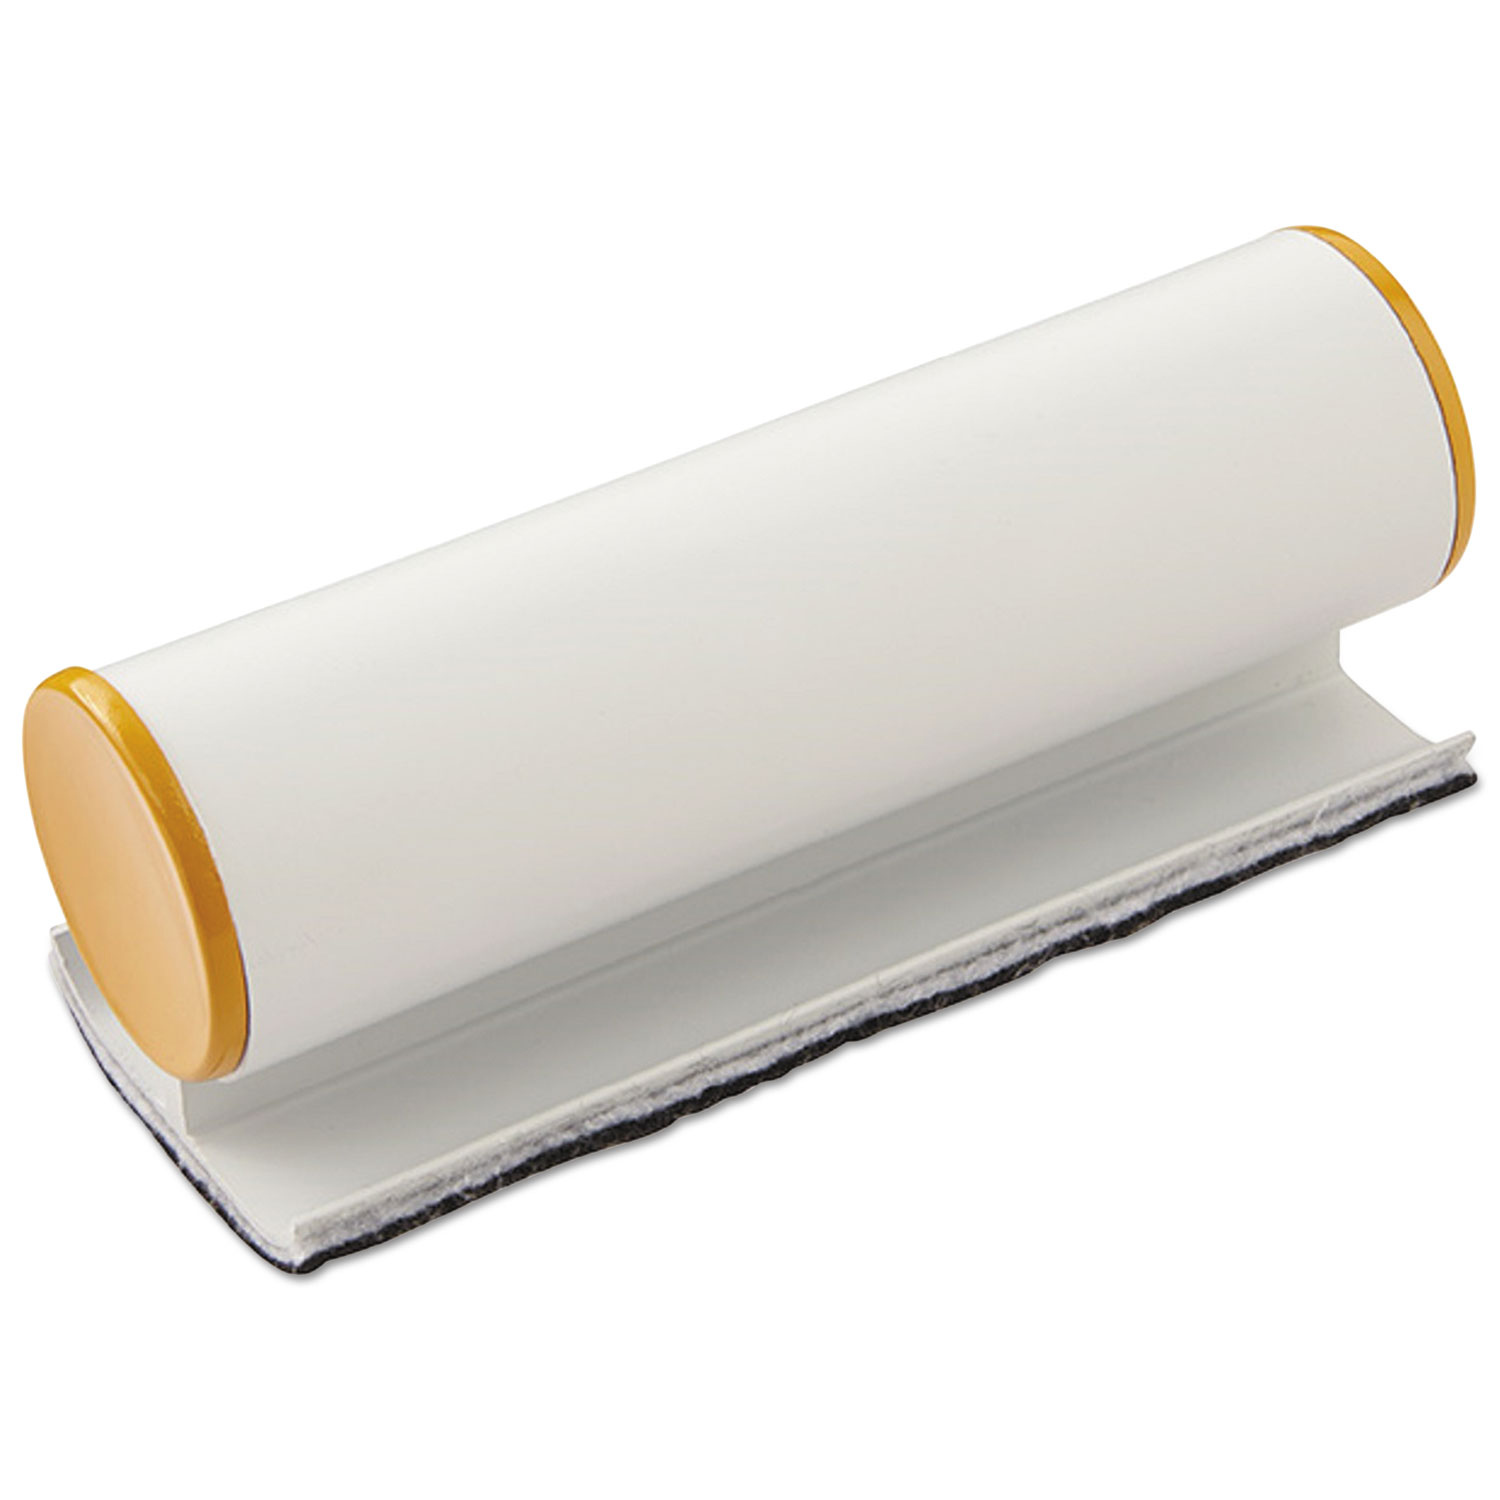 Big E Eraser with Pad, Refillable, 5 x 2 x 2, Silver